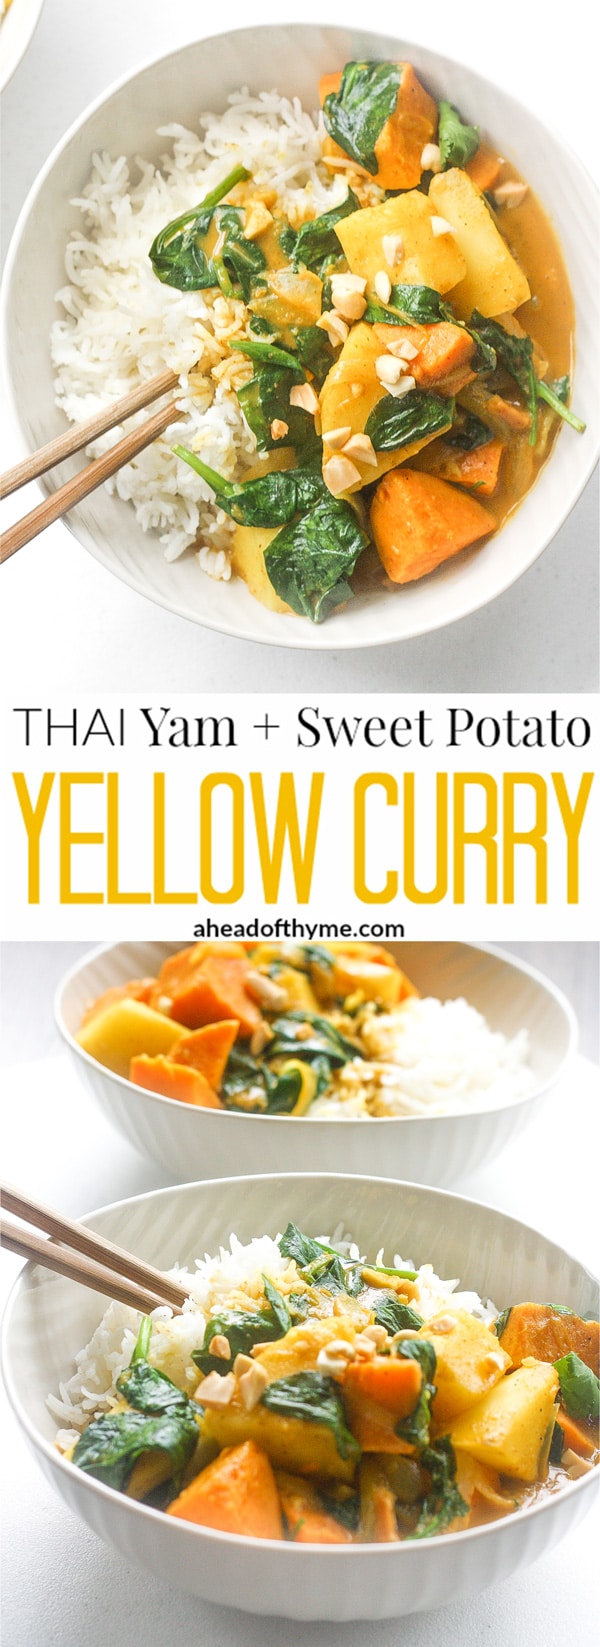 Thai Yam and Sweet Potato Yellow Curry